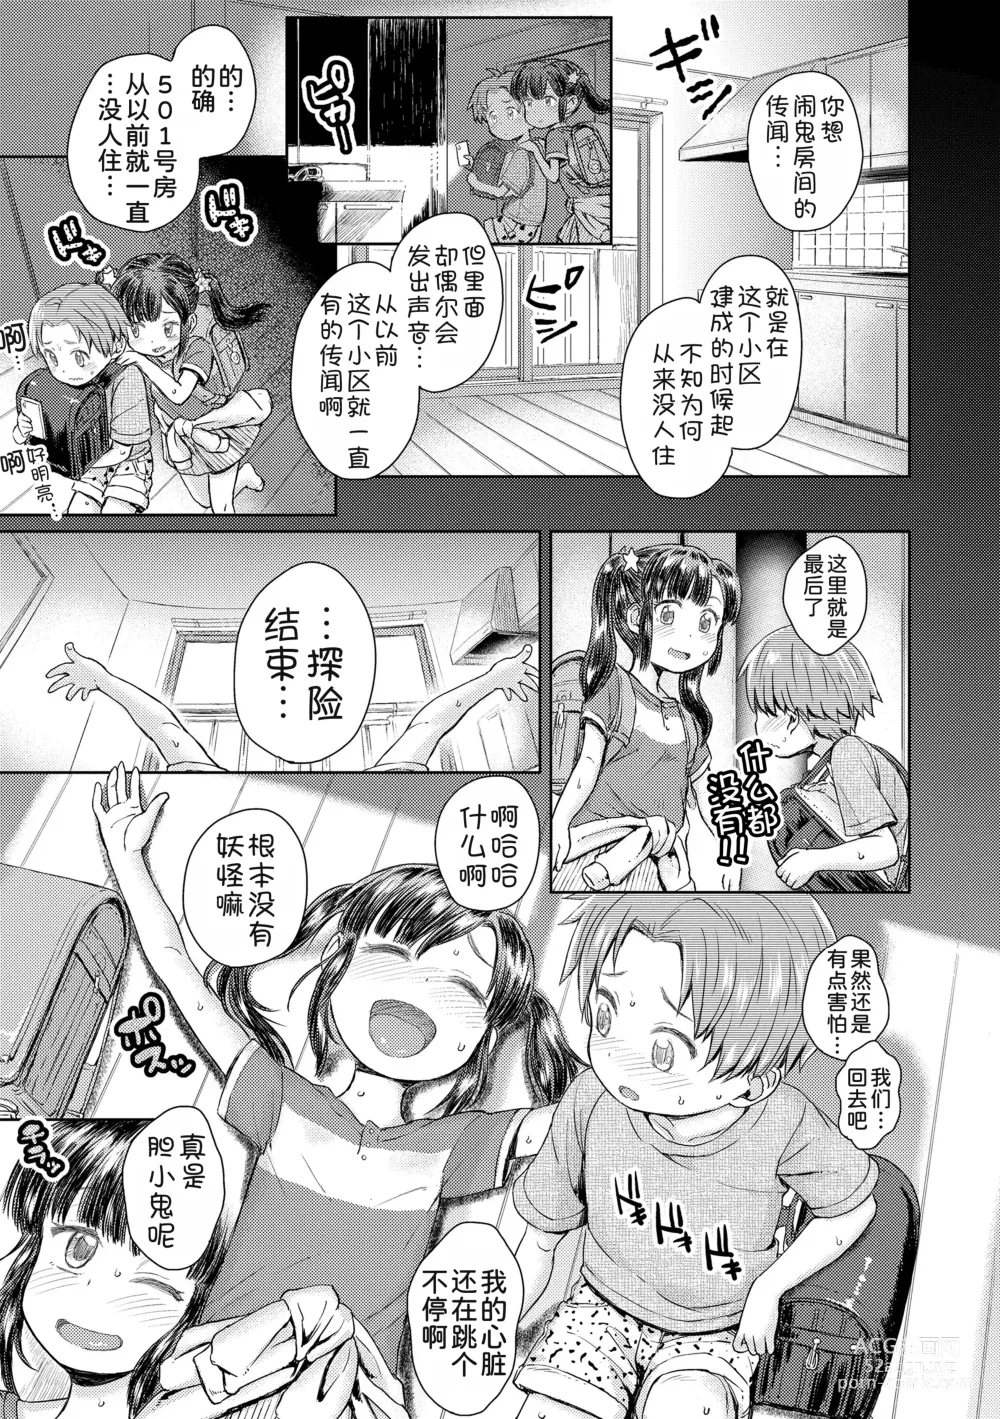 Page 4 of manga Akagane Danchi no Obake Heya Ch. 1-3